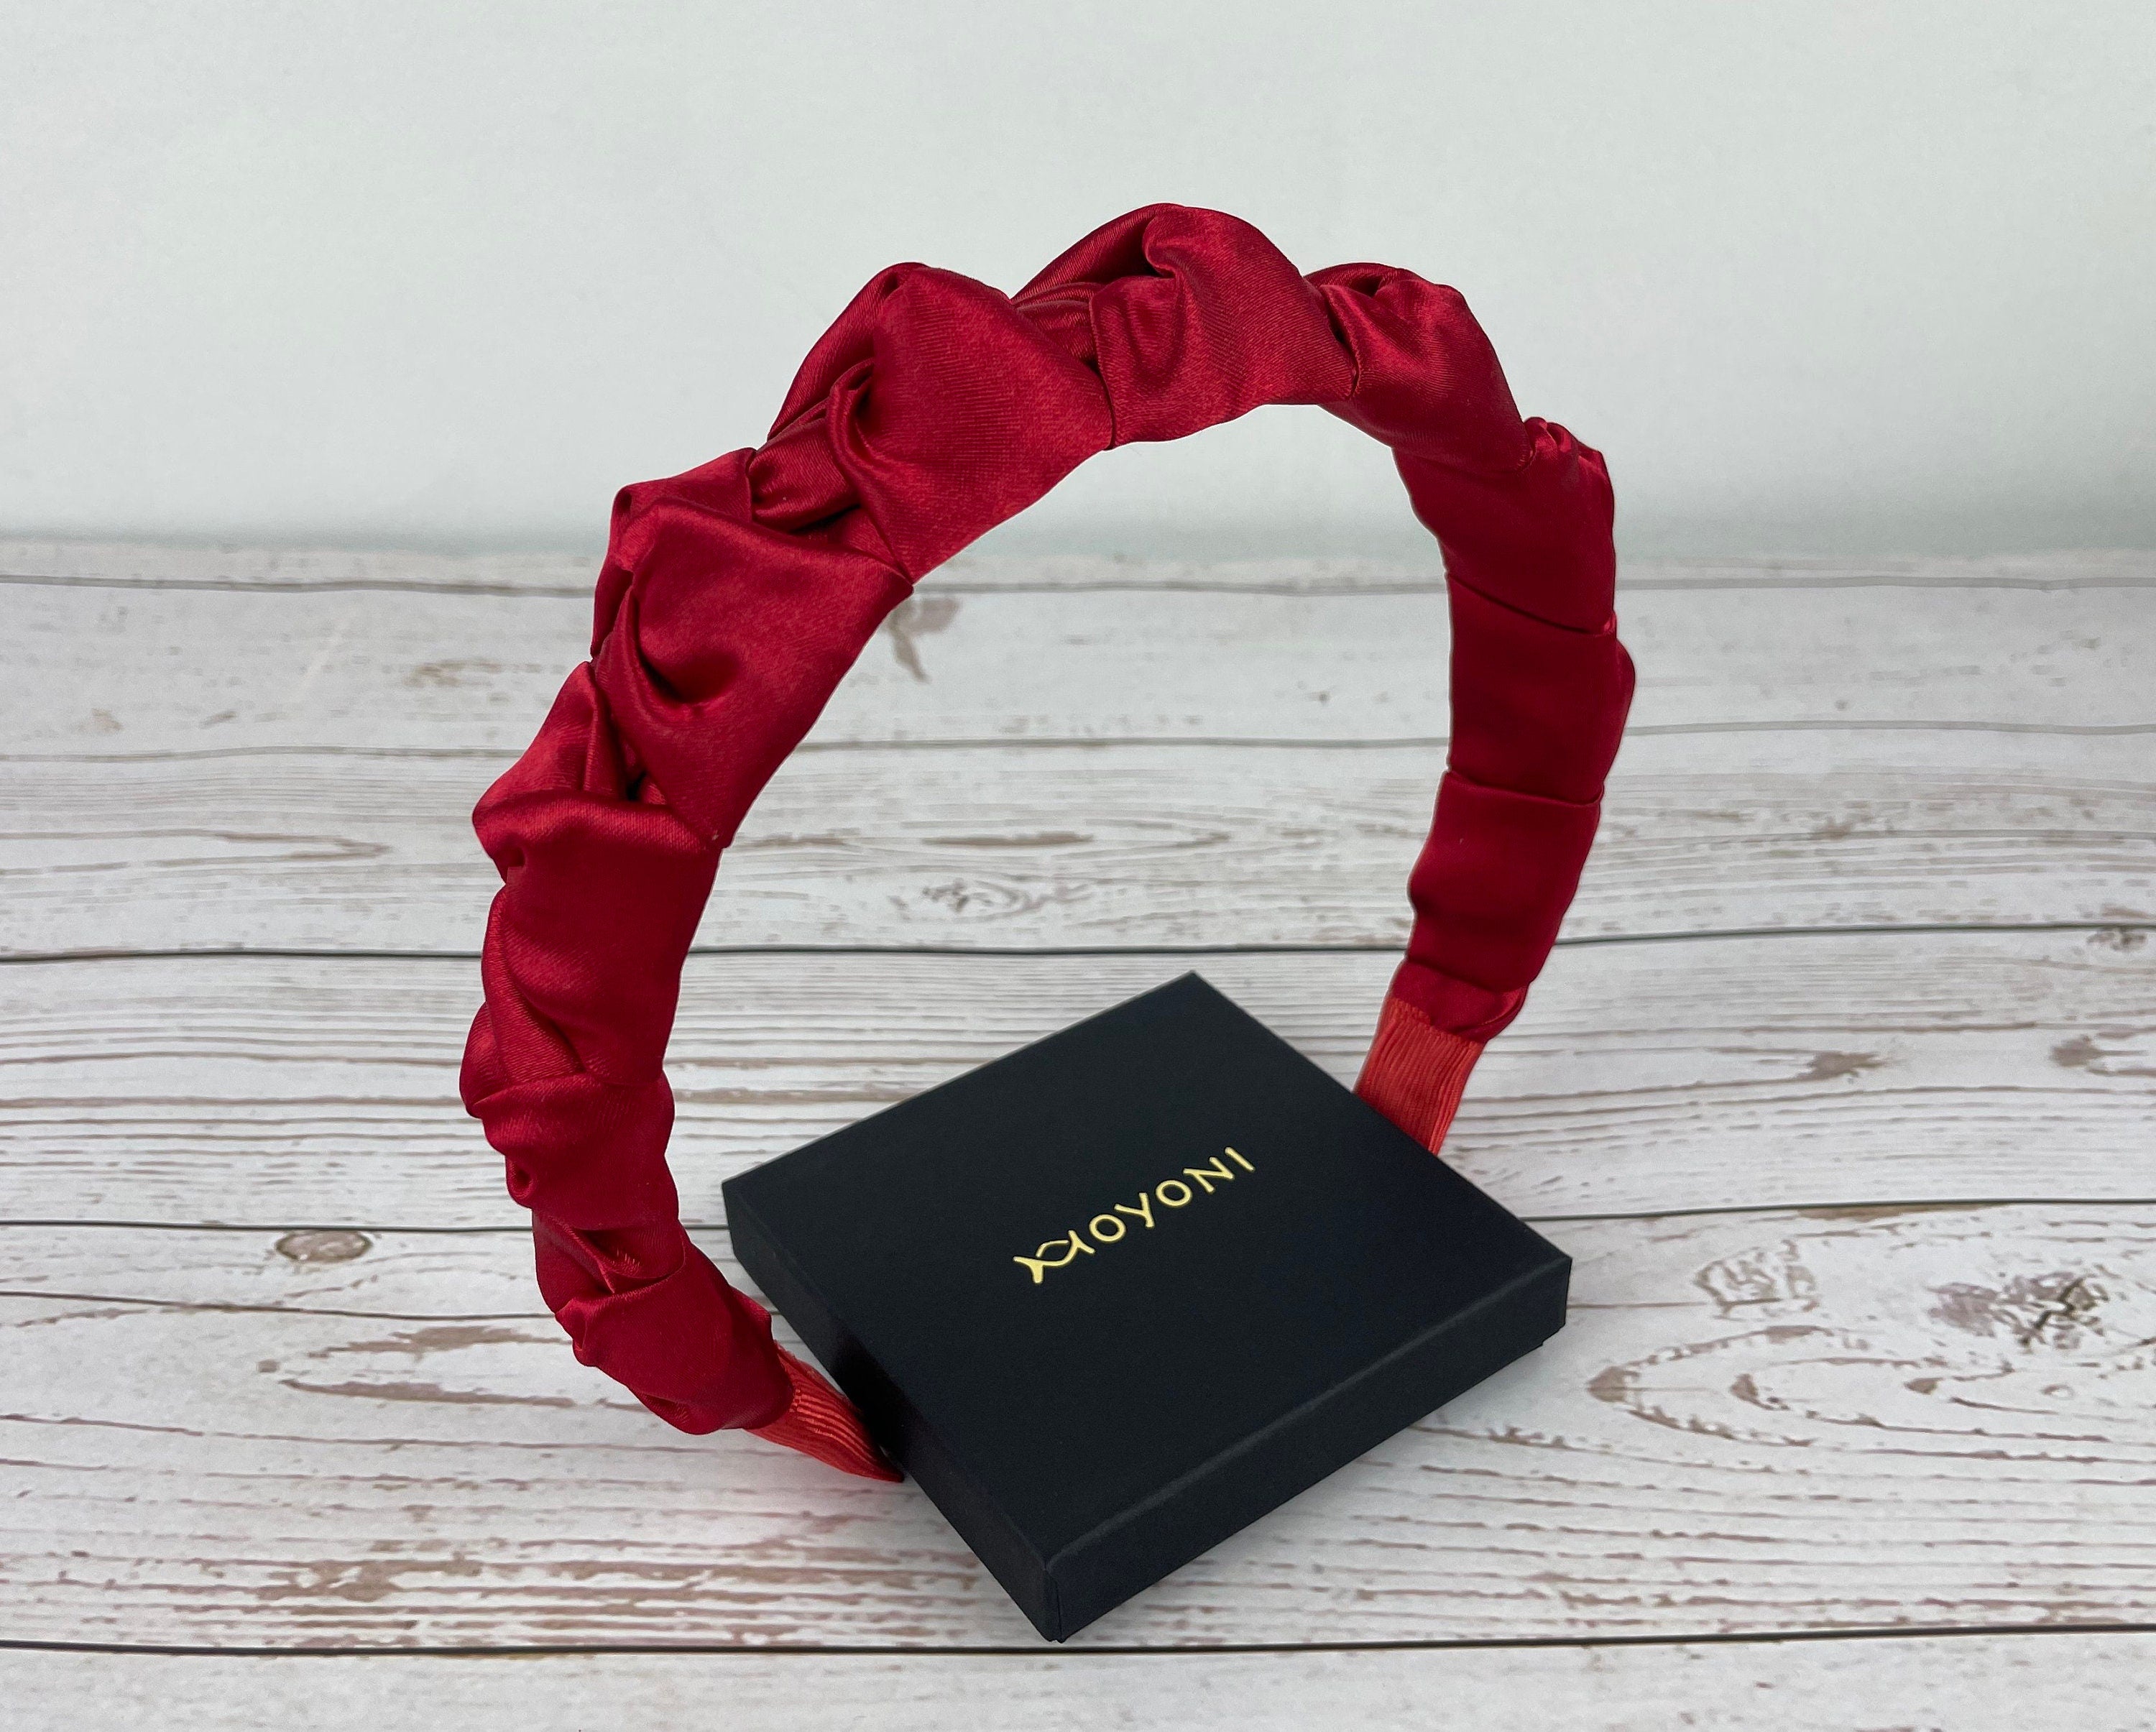 Fashion-forward Red Satin Braided Headband - Stylish Design, No Padding - Ideal Gift for Fashionable Women